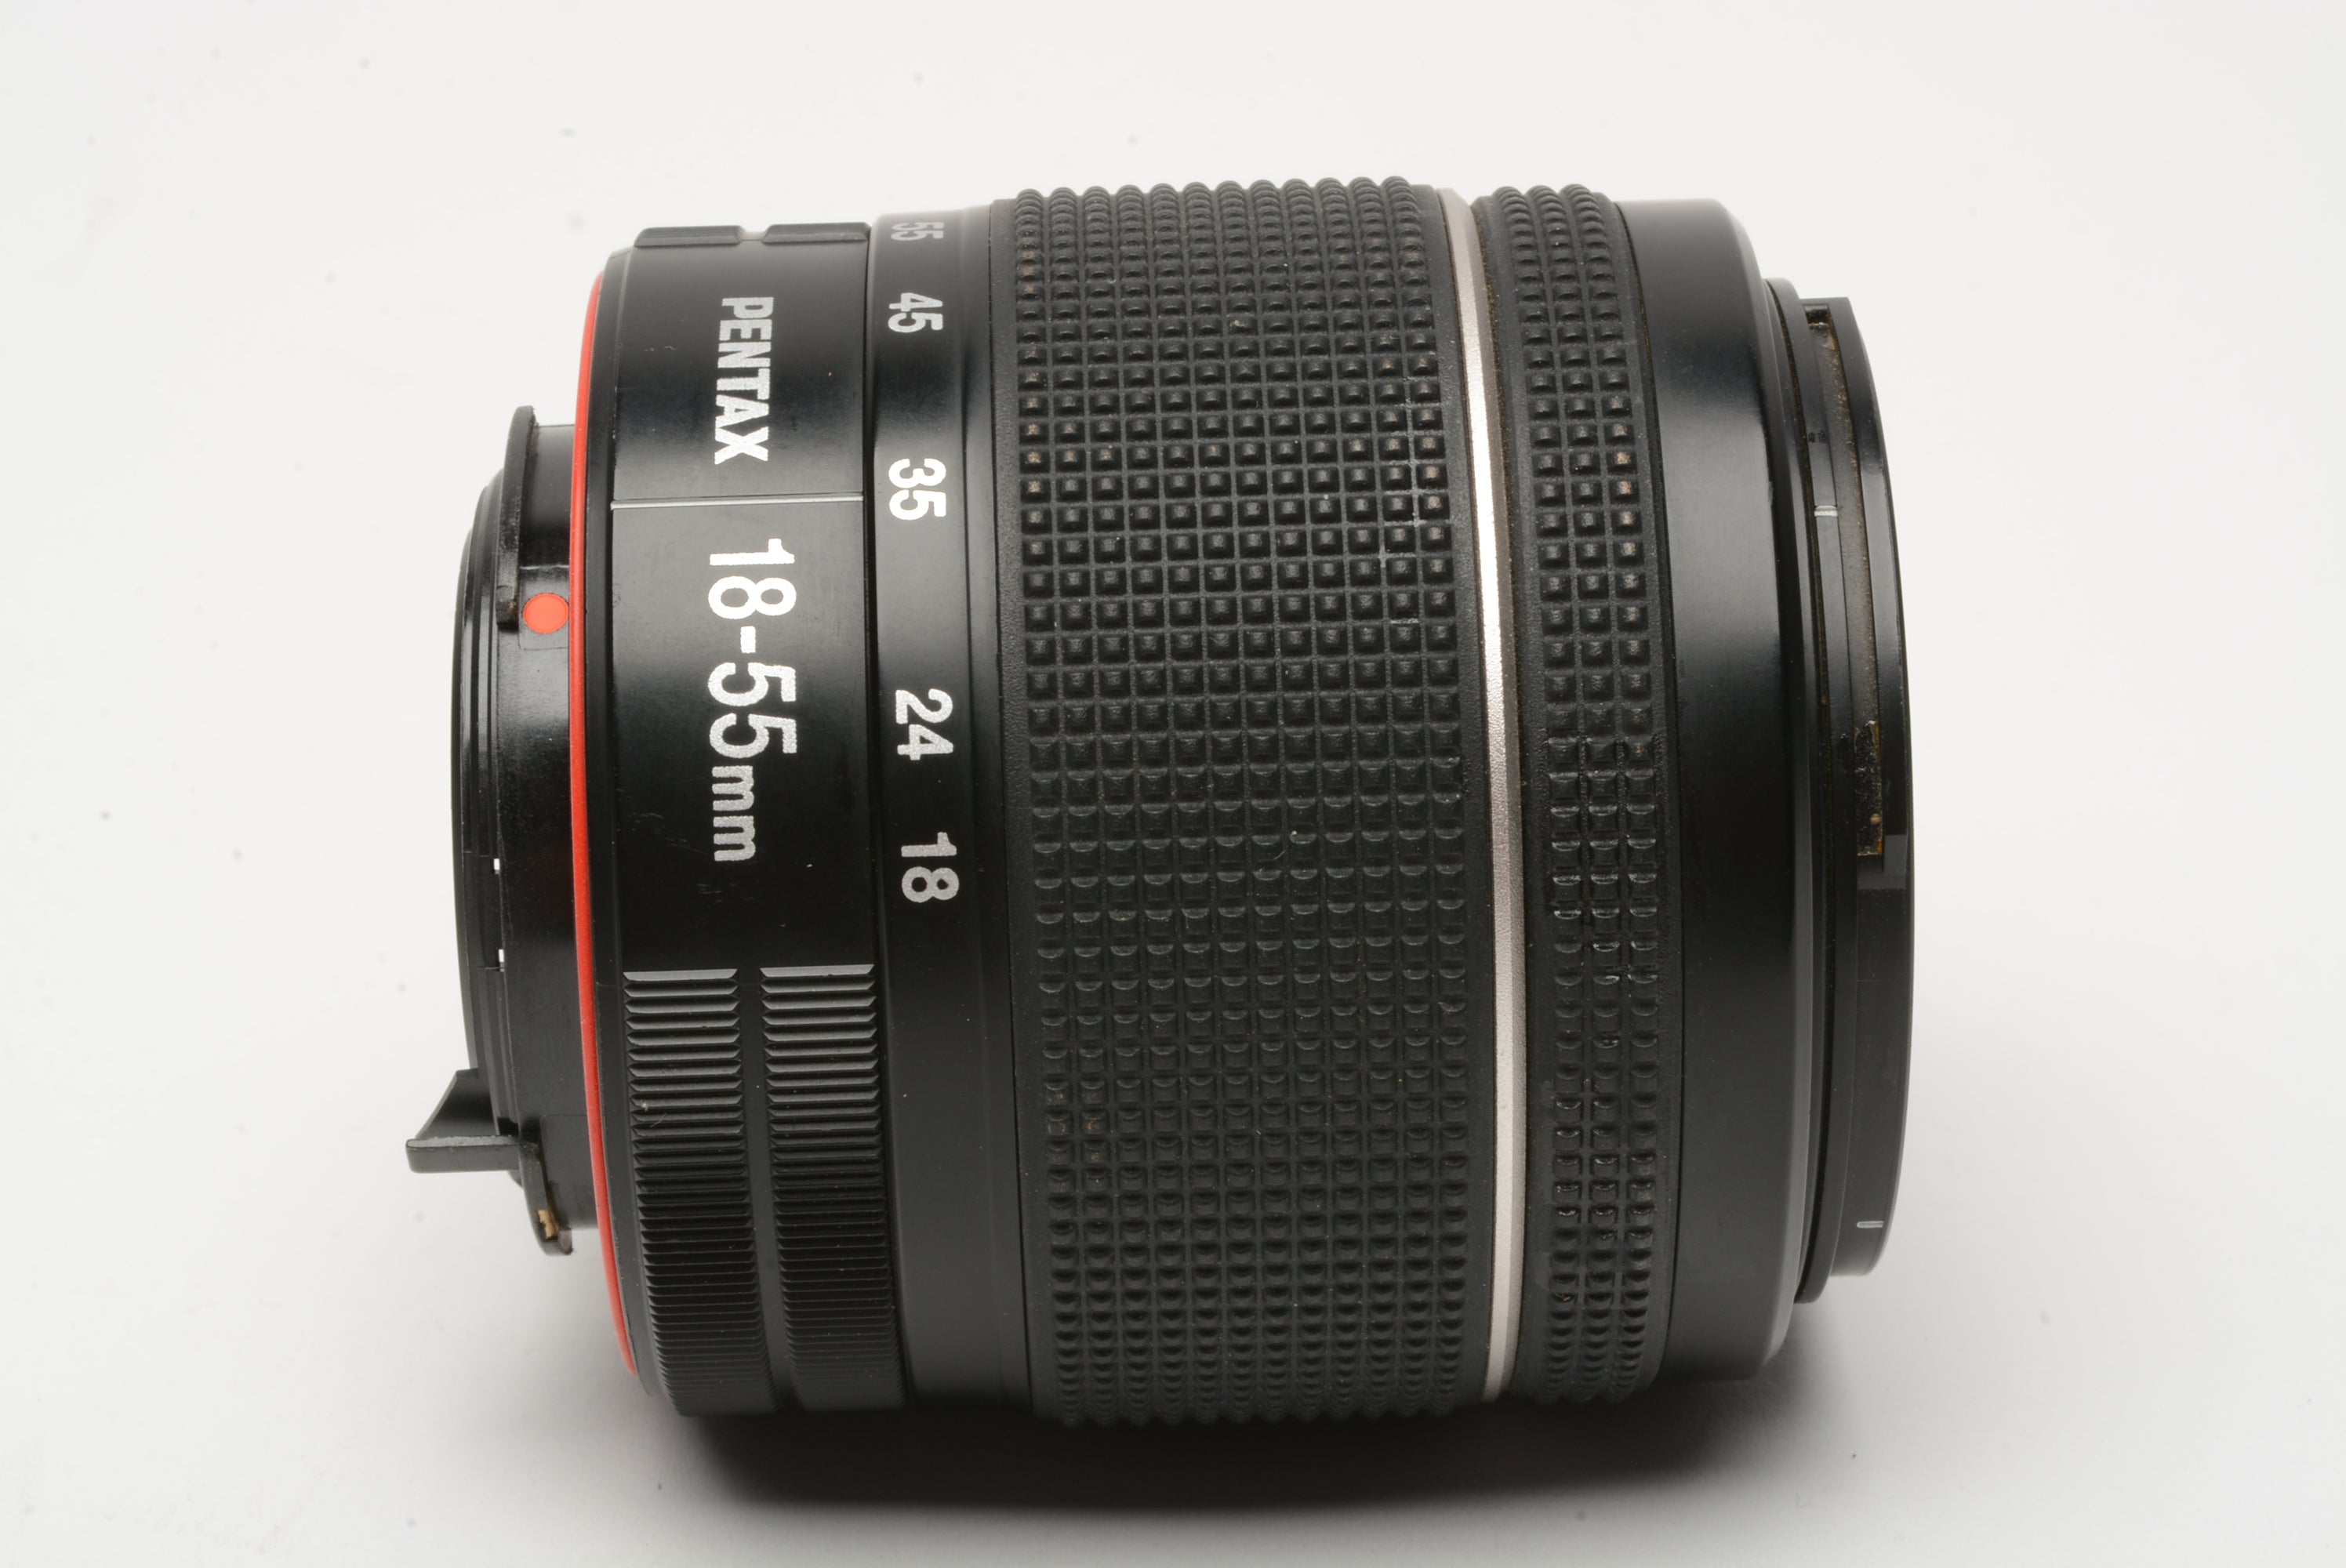 Pentax SMC DA L 18-55mm f3.5-5.6 AL WR compact zoom lens – RecycledPhoto